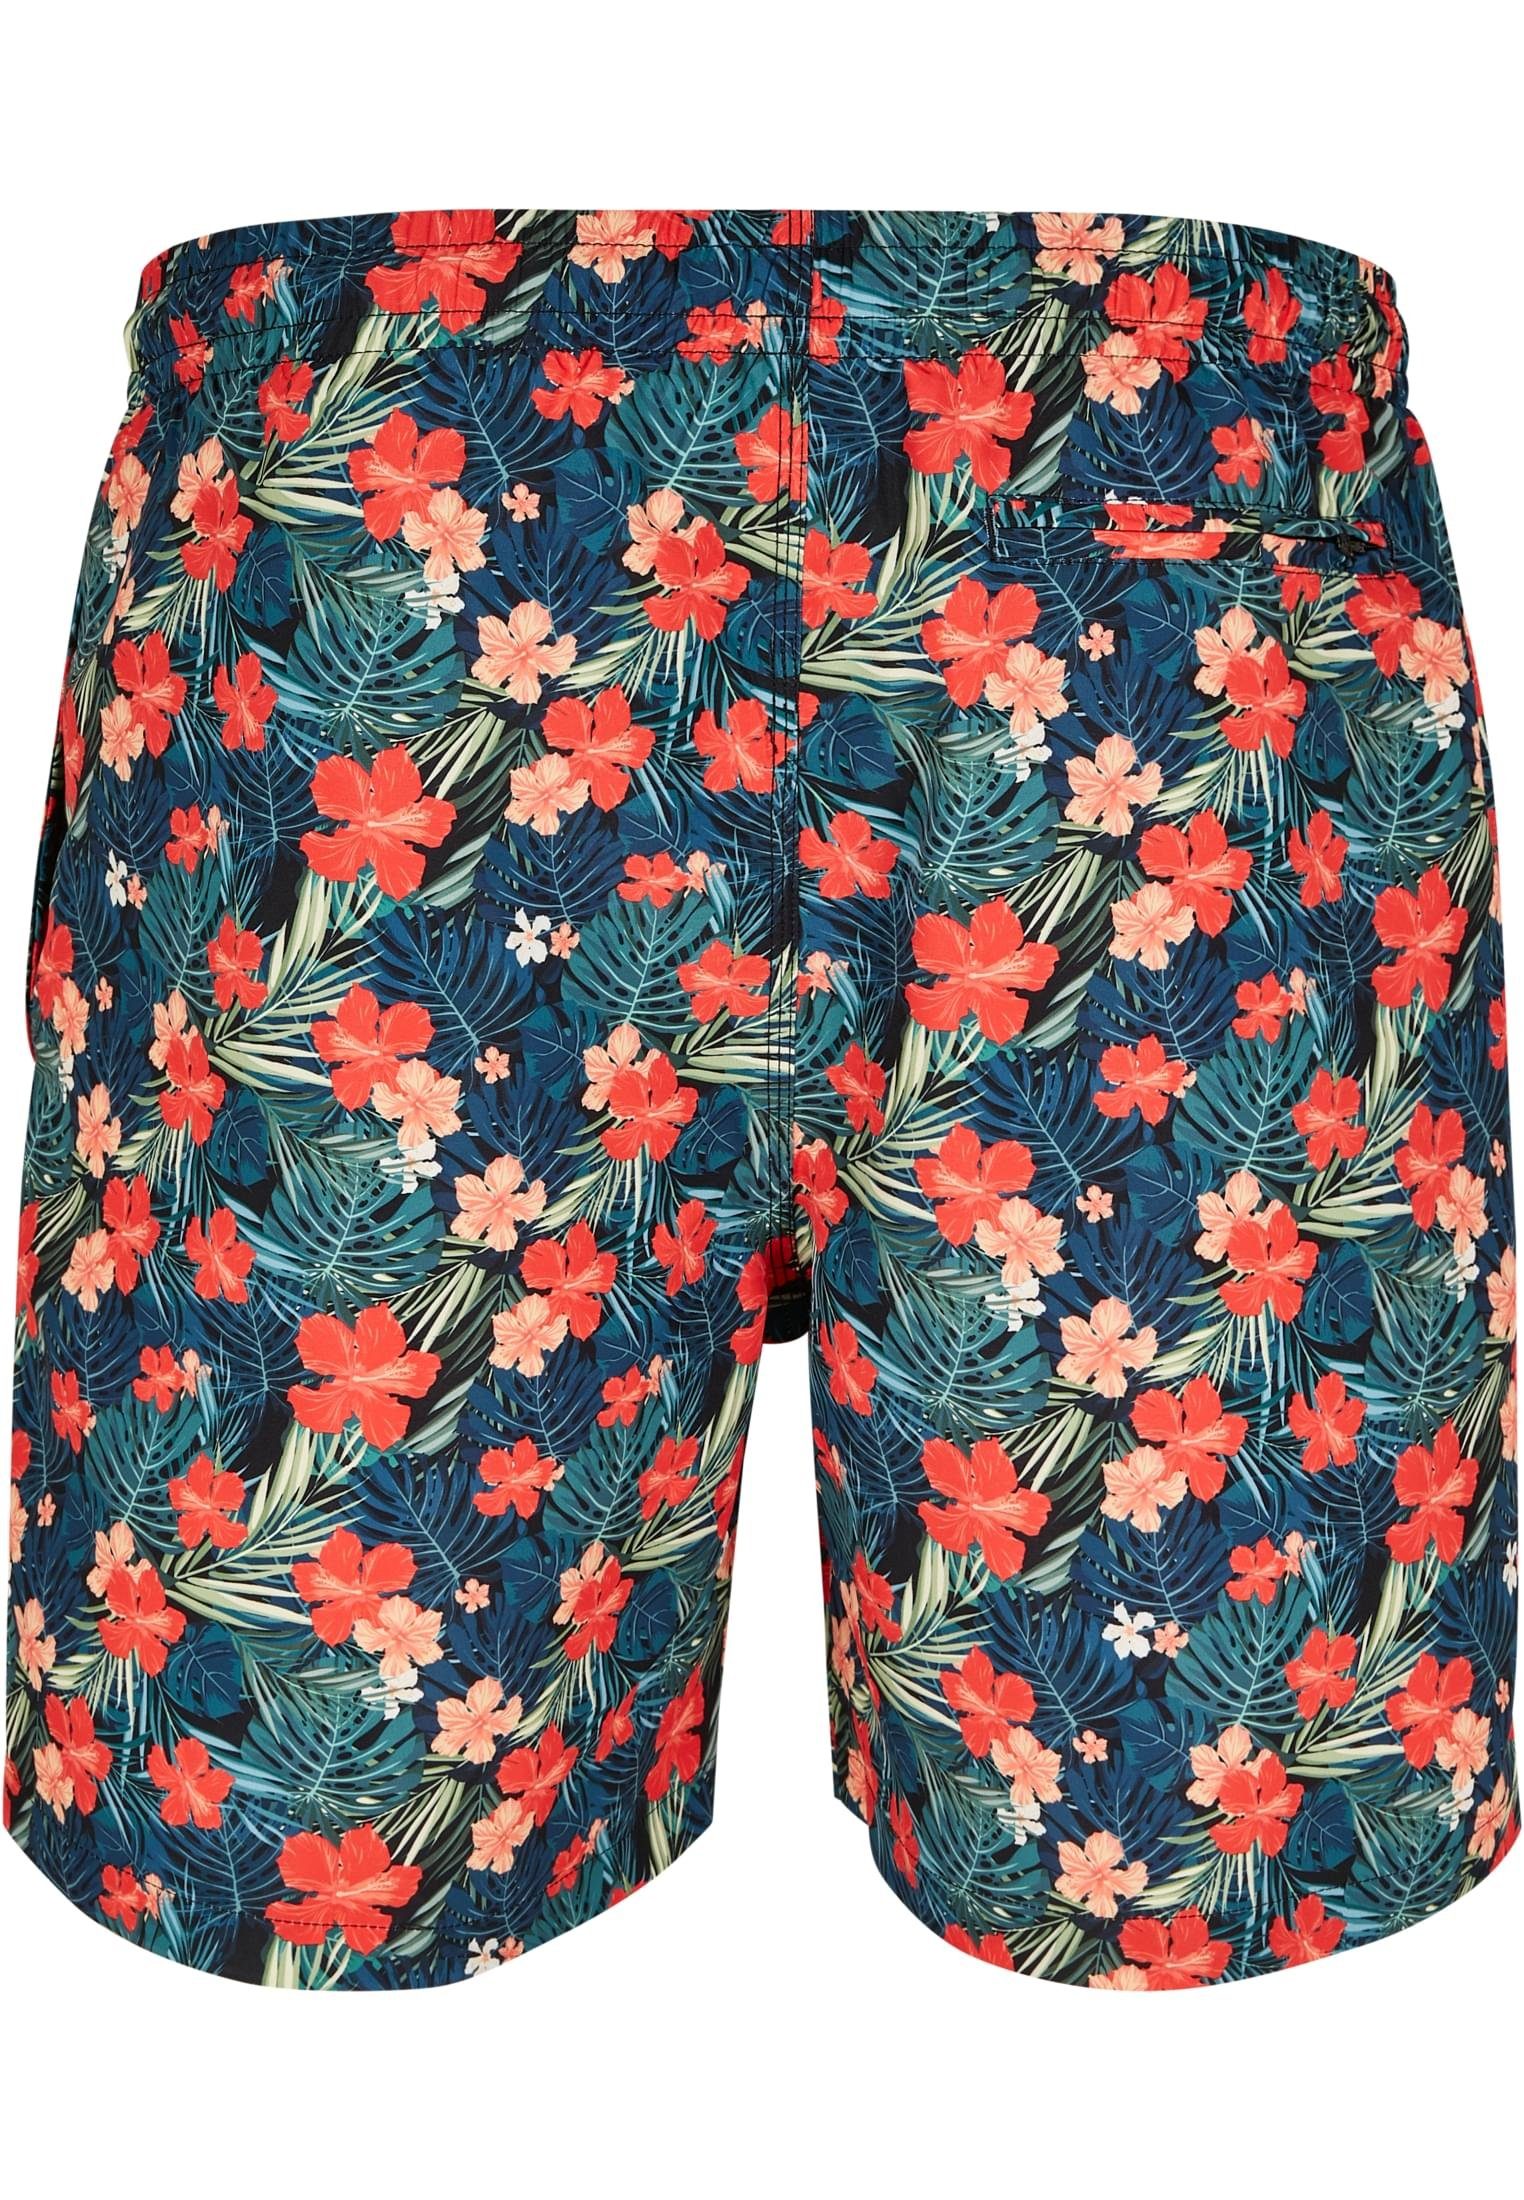 Herren Badeshorts Shorts CLASSICS Swim blk/tropical URBAN Pattern